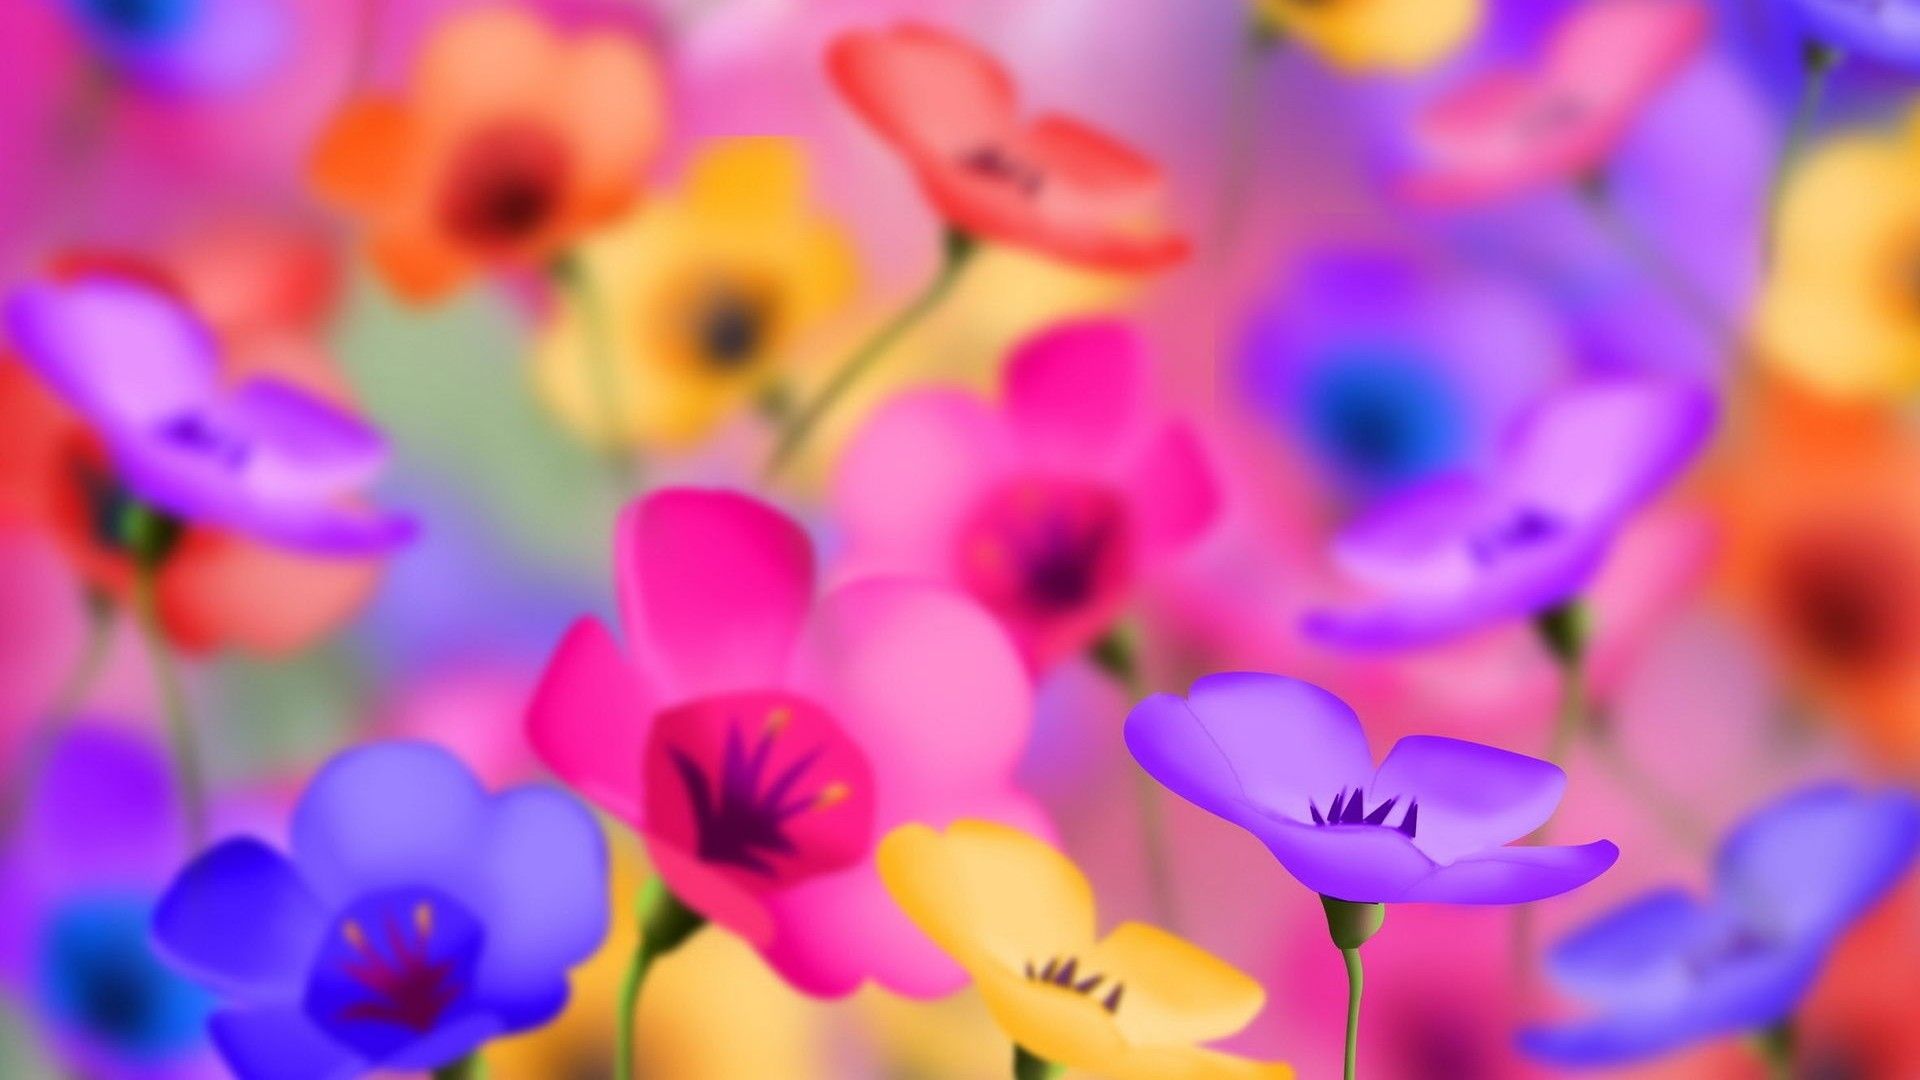 4K wallpaper: Flower Image HD Wallpaper 1080p Download